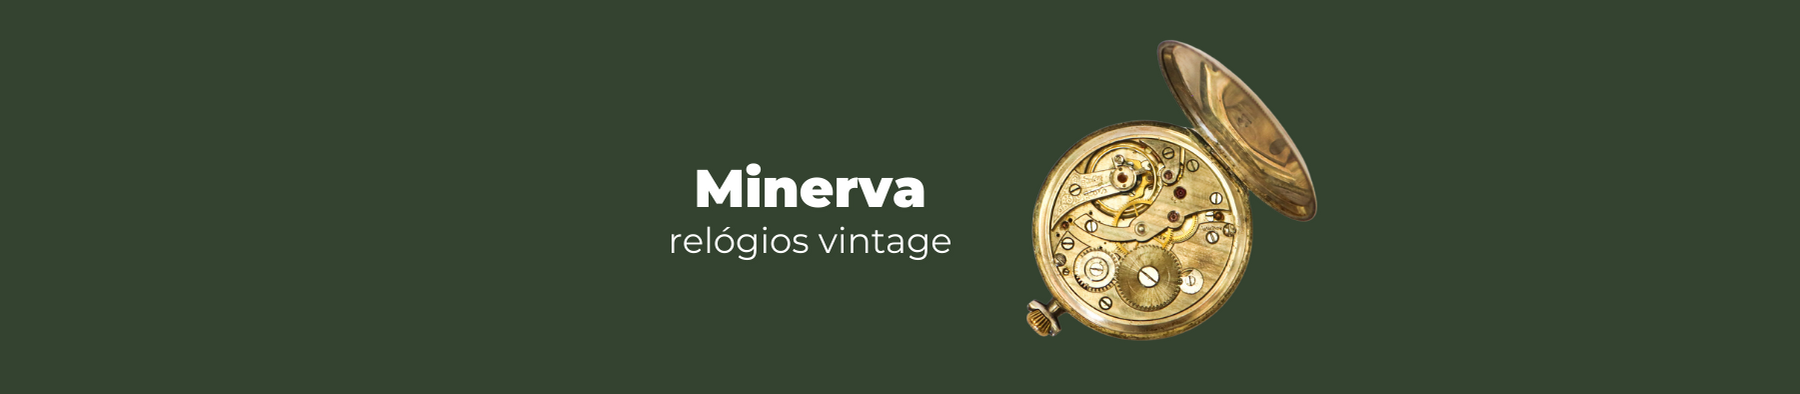 minerva relógios vintage